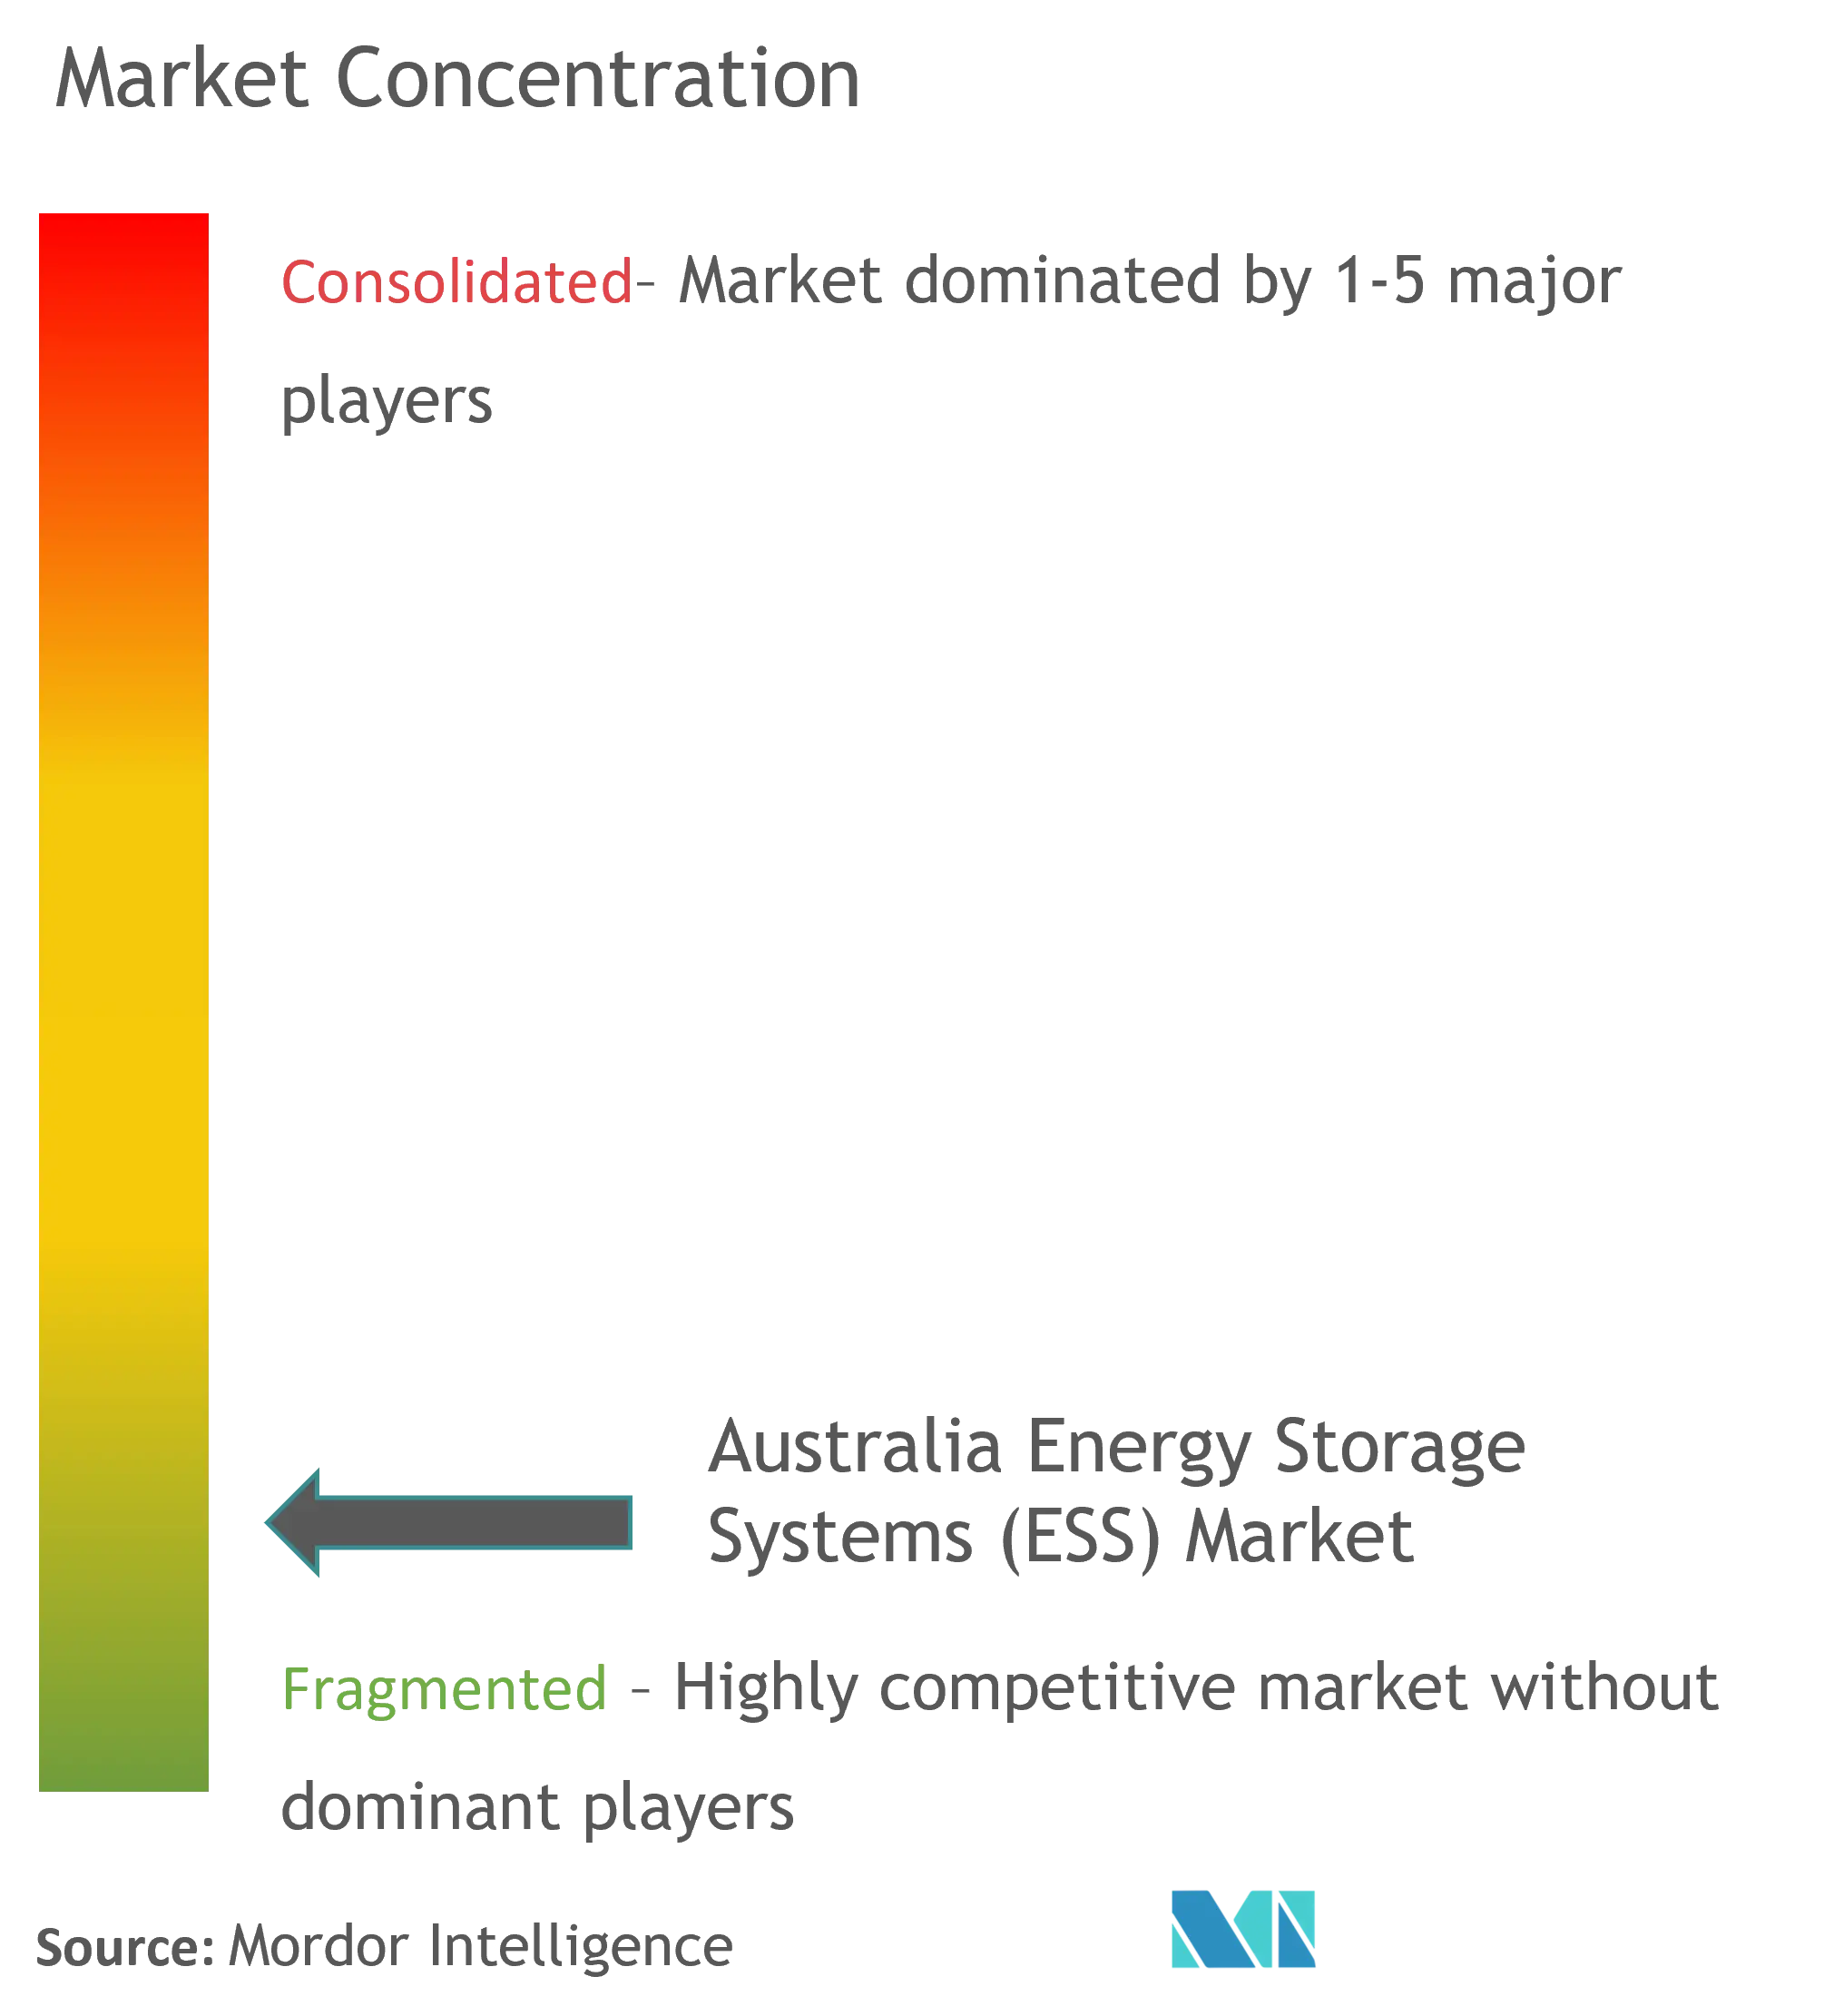 Australia Energy Storage Systems (ESS) Market Concentration